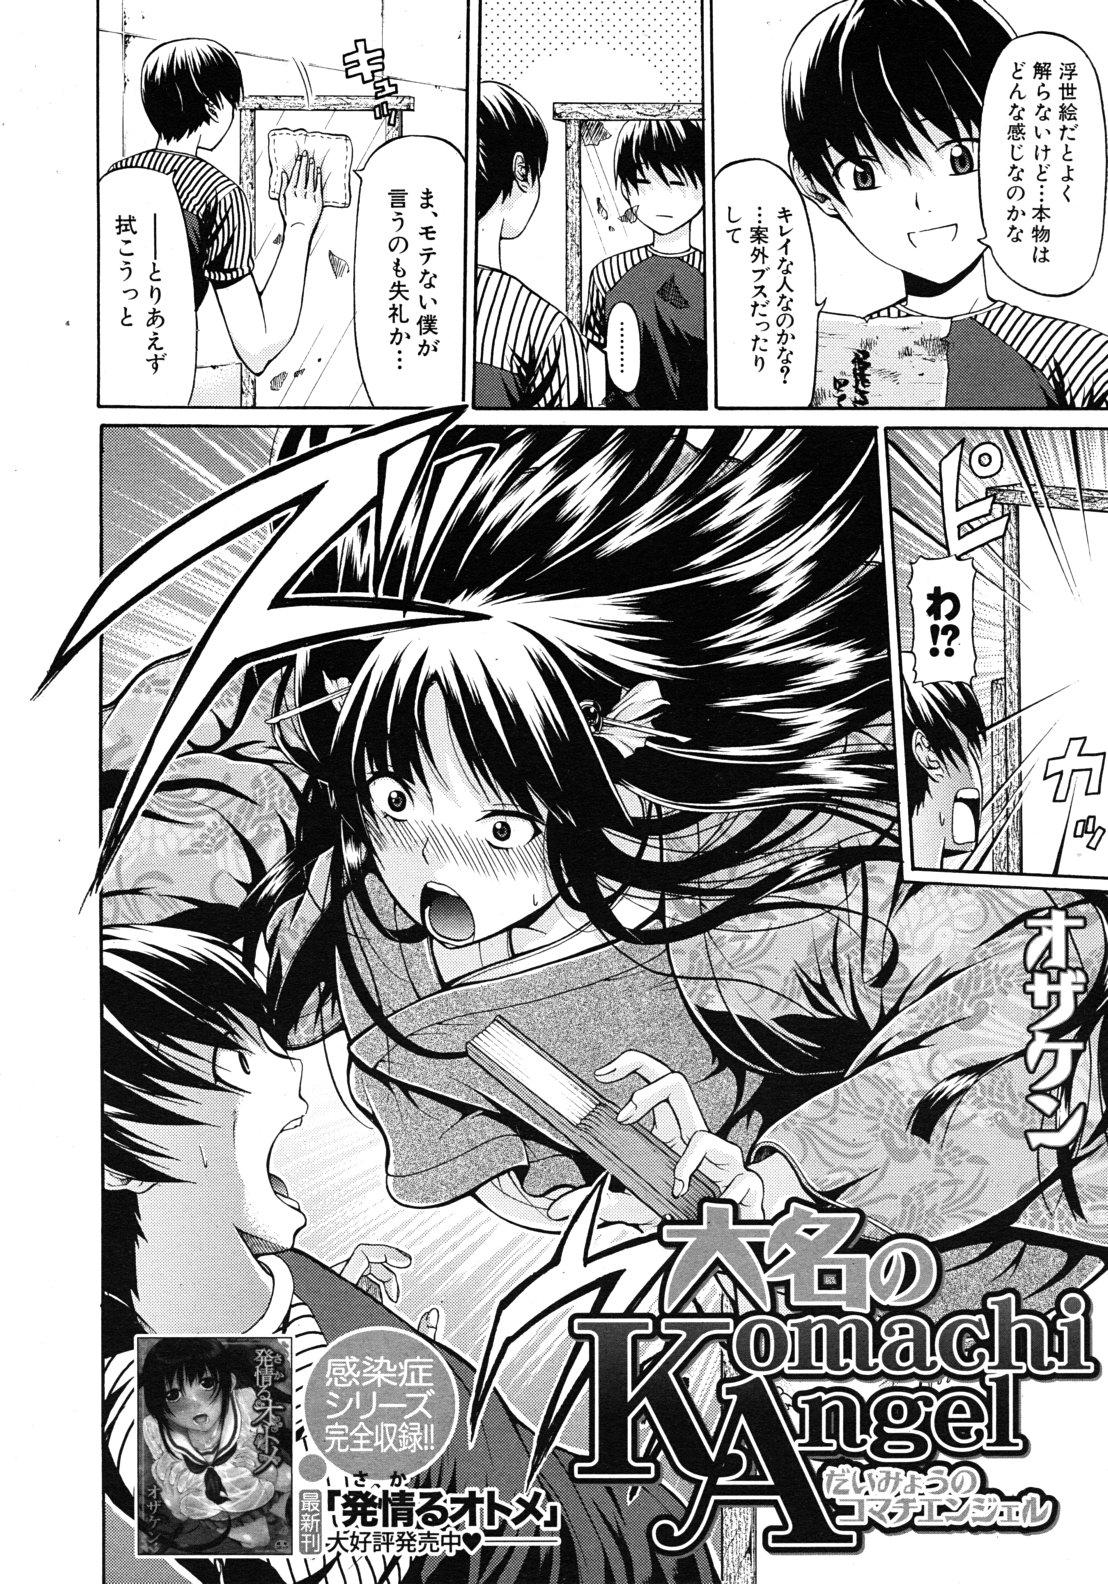 Nalgas Daimyou no Komachi Angel Camgirls - Page 2